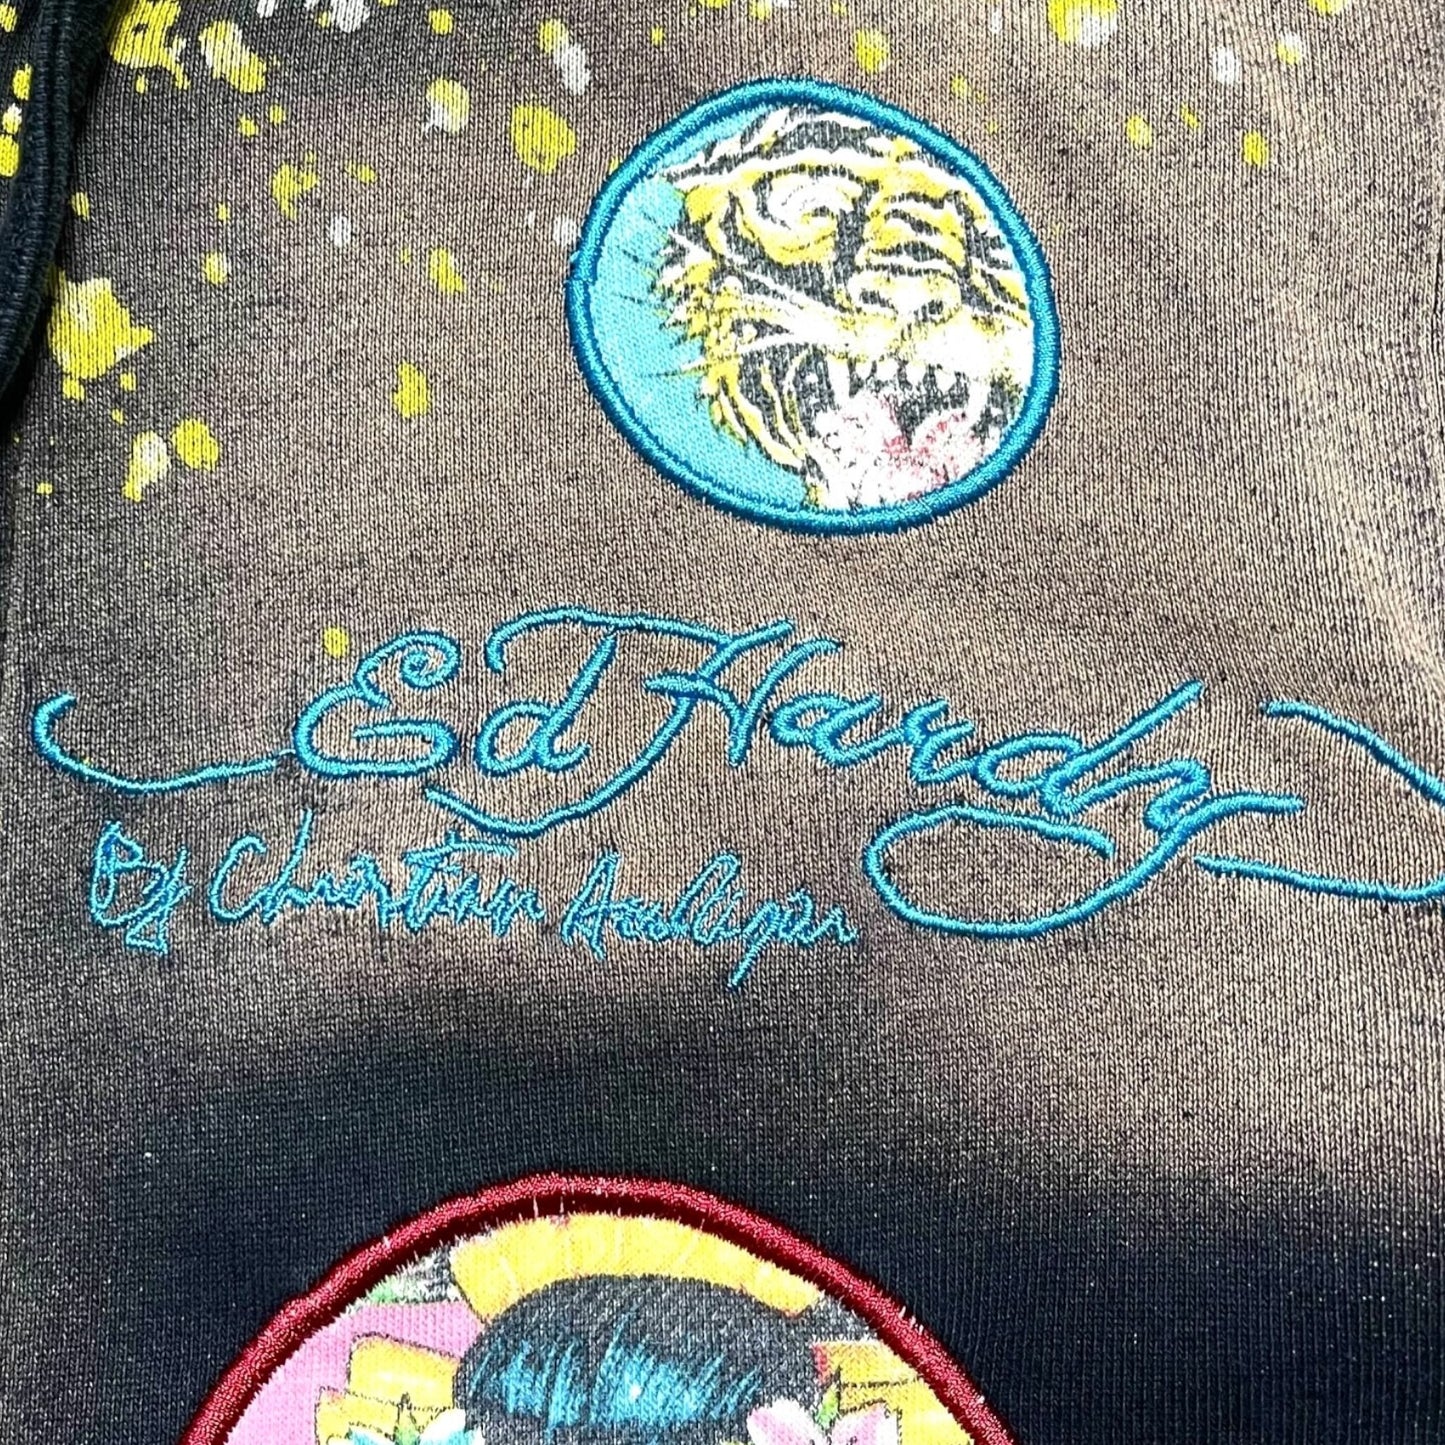 "Ed Hardy" Patch design full zip hoodie